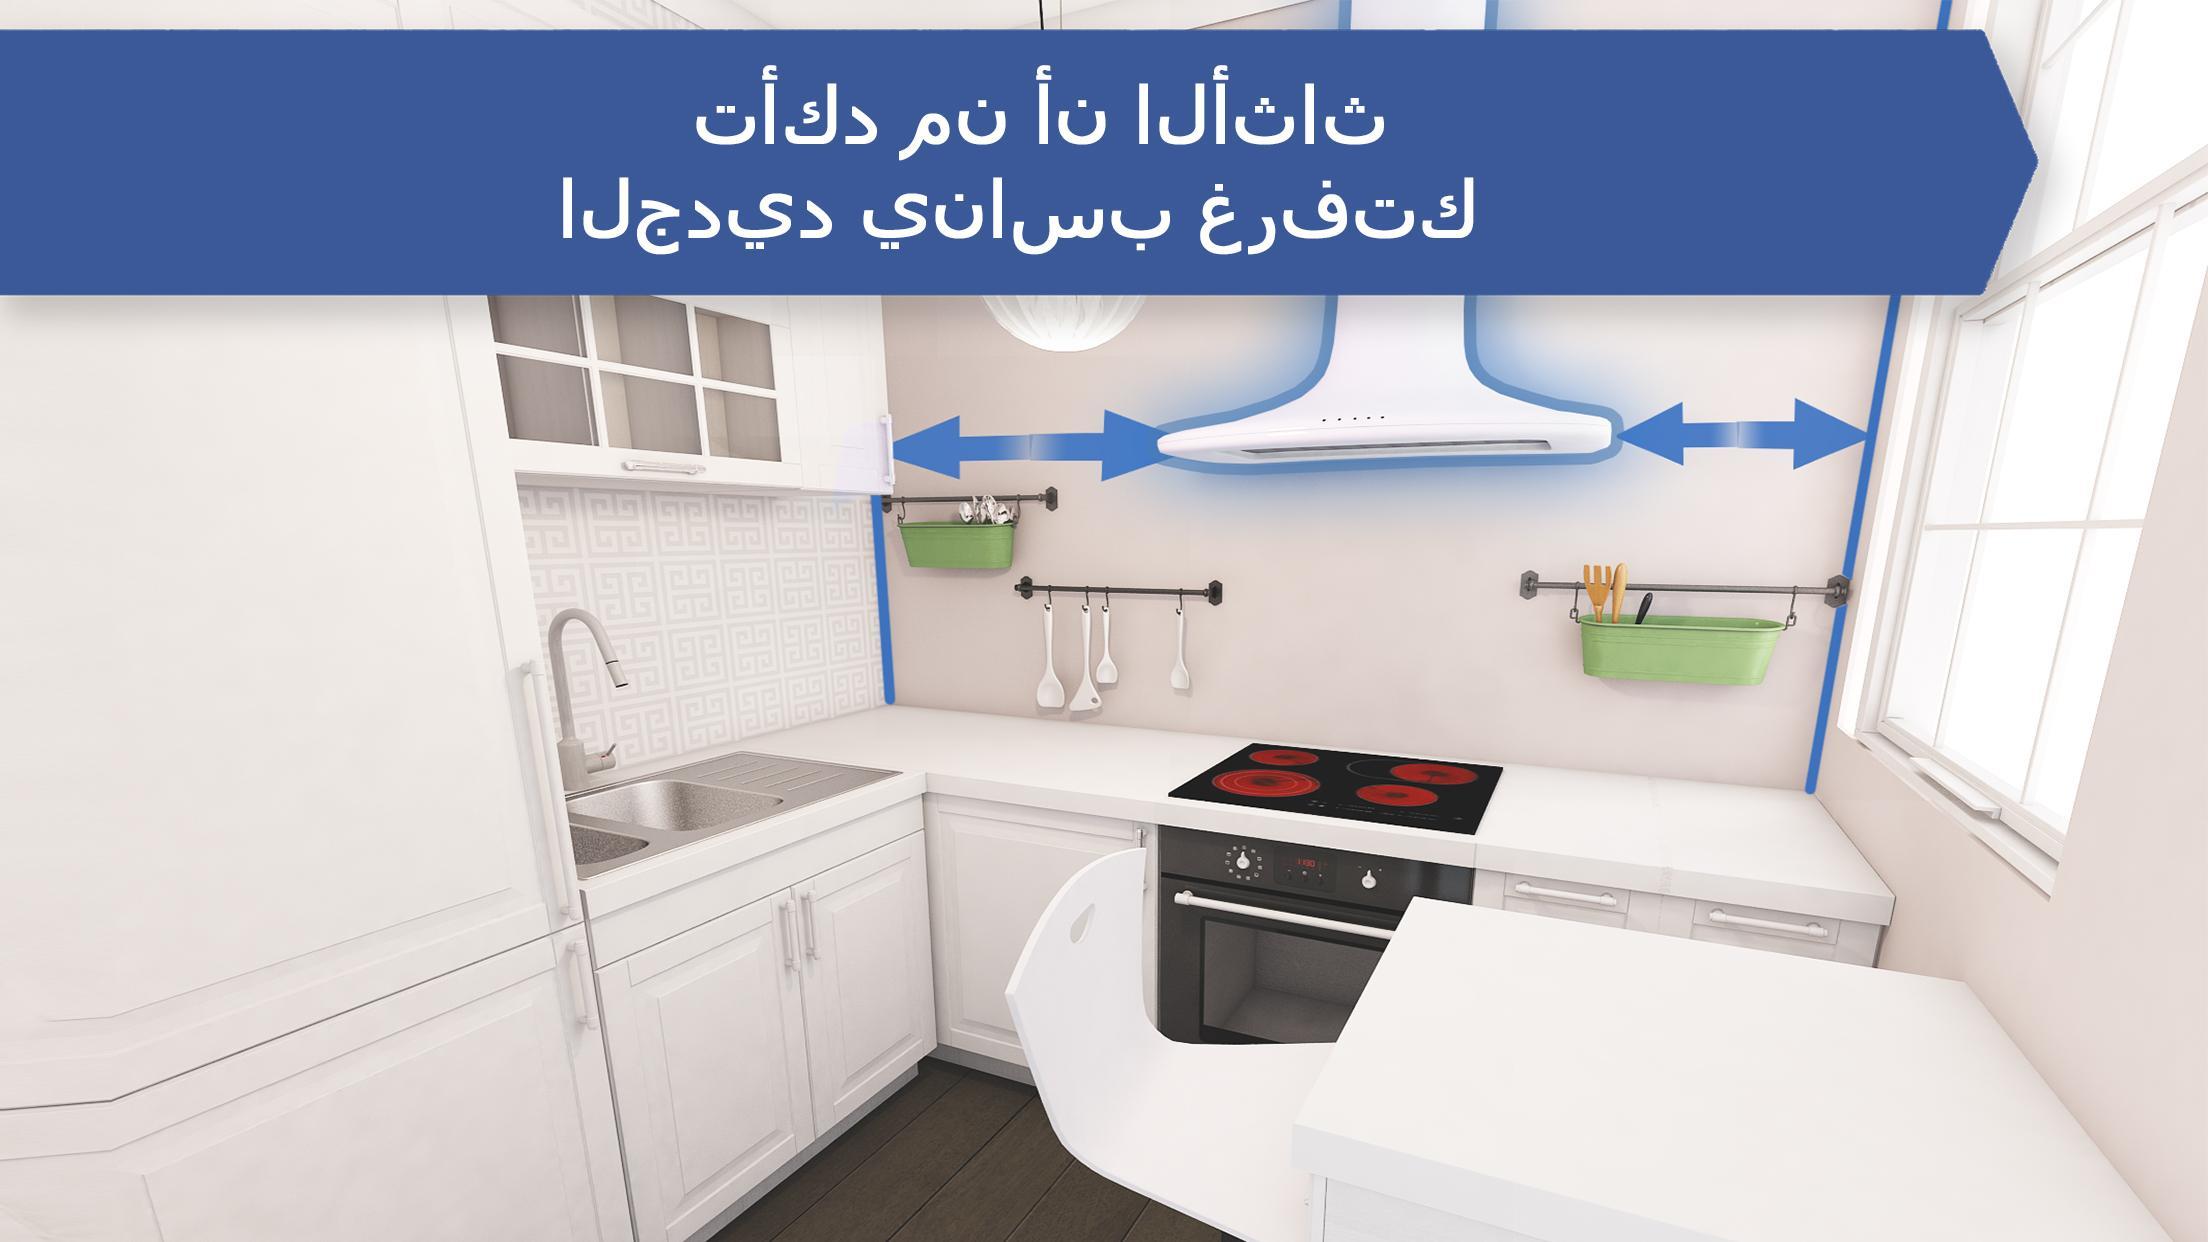 تصميم المطبخ ل ايكيا داخلي for android apk download